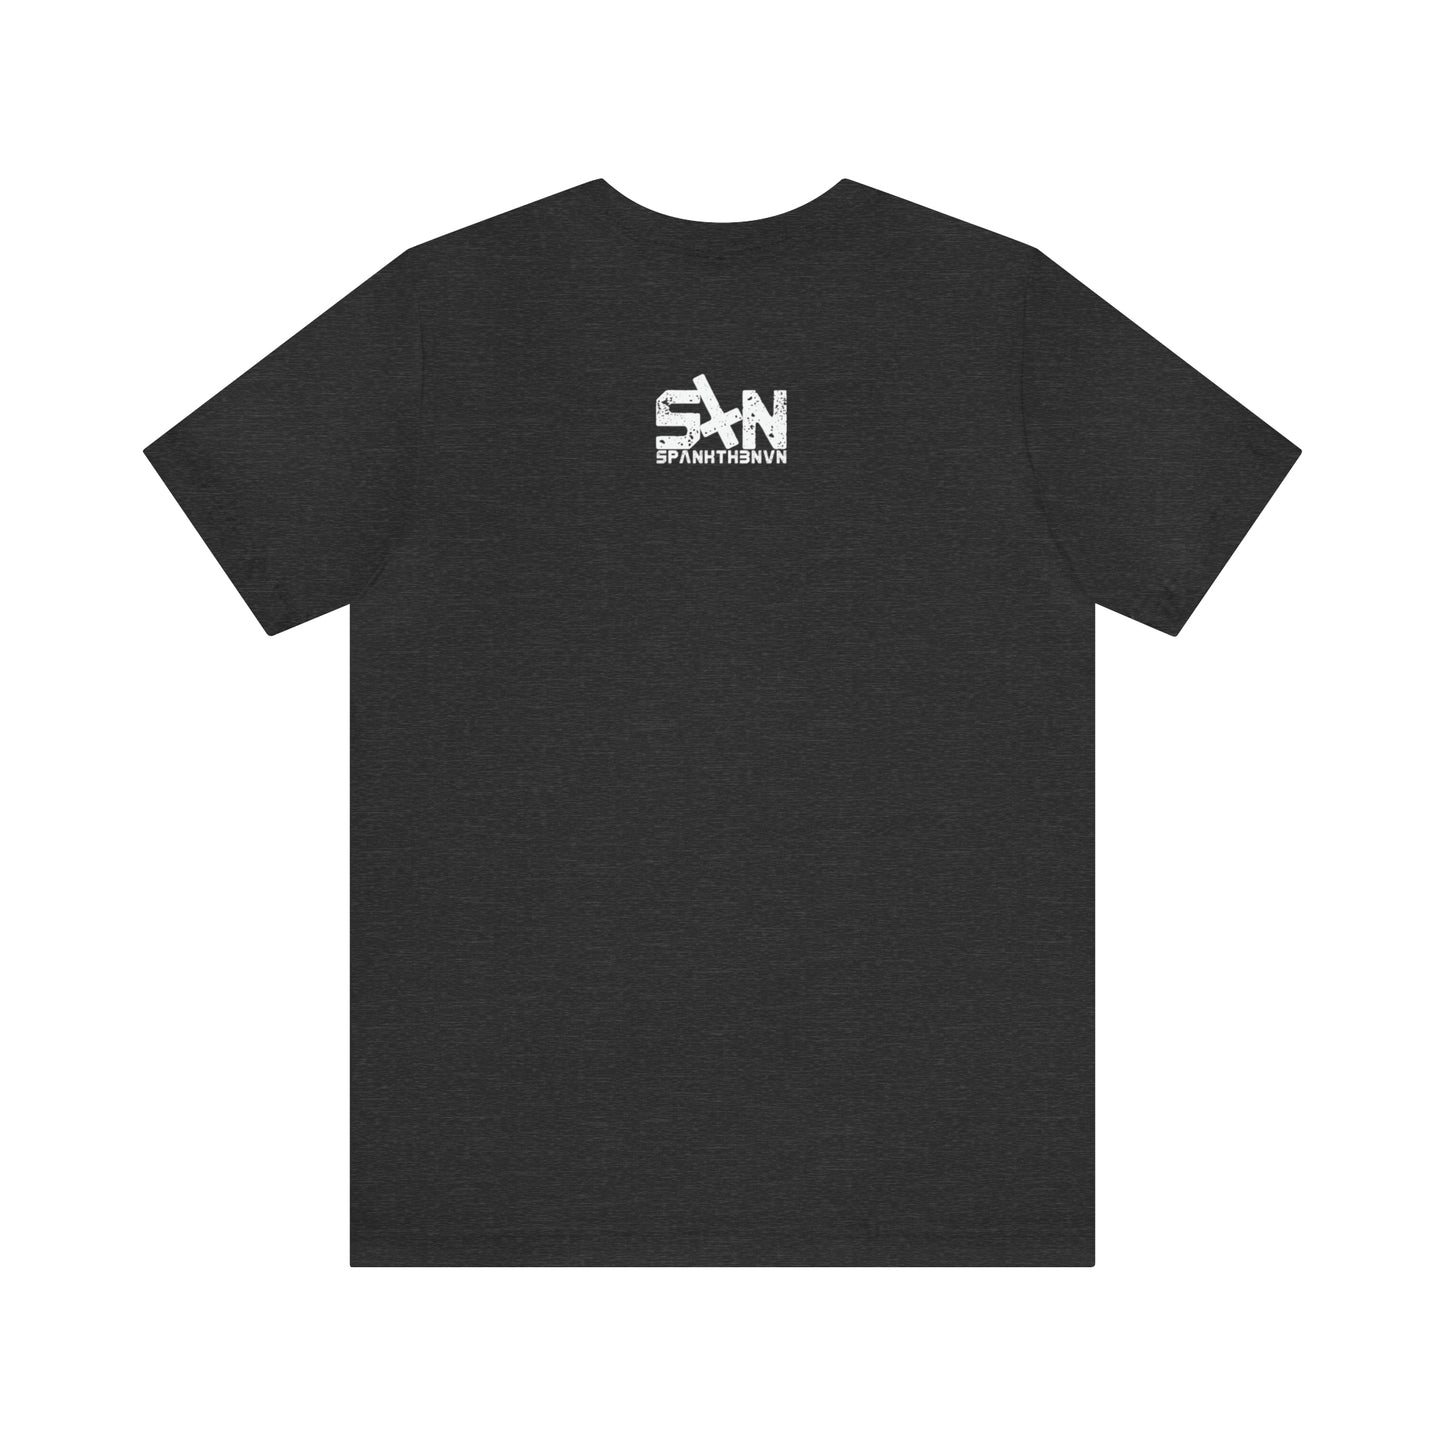 theGRIND Softstyle Black T-Shirt